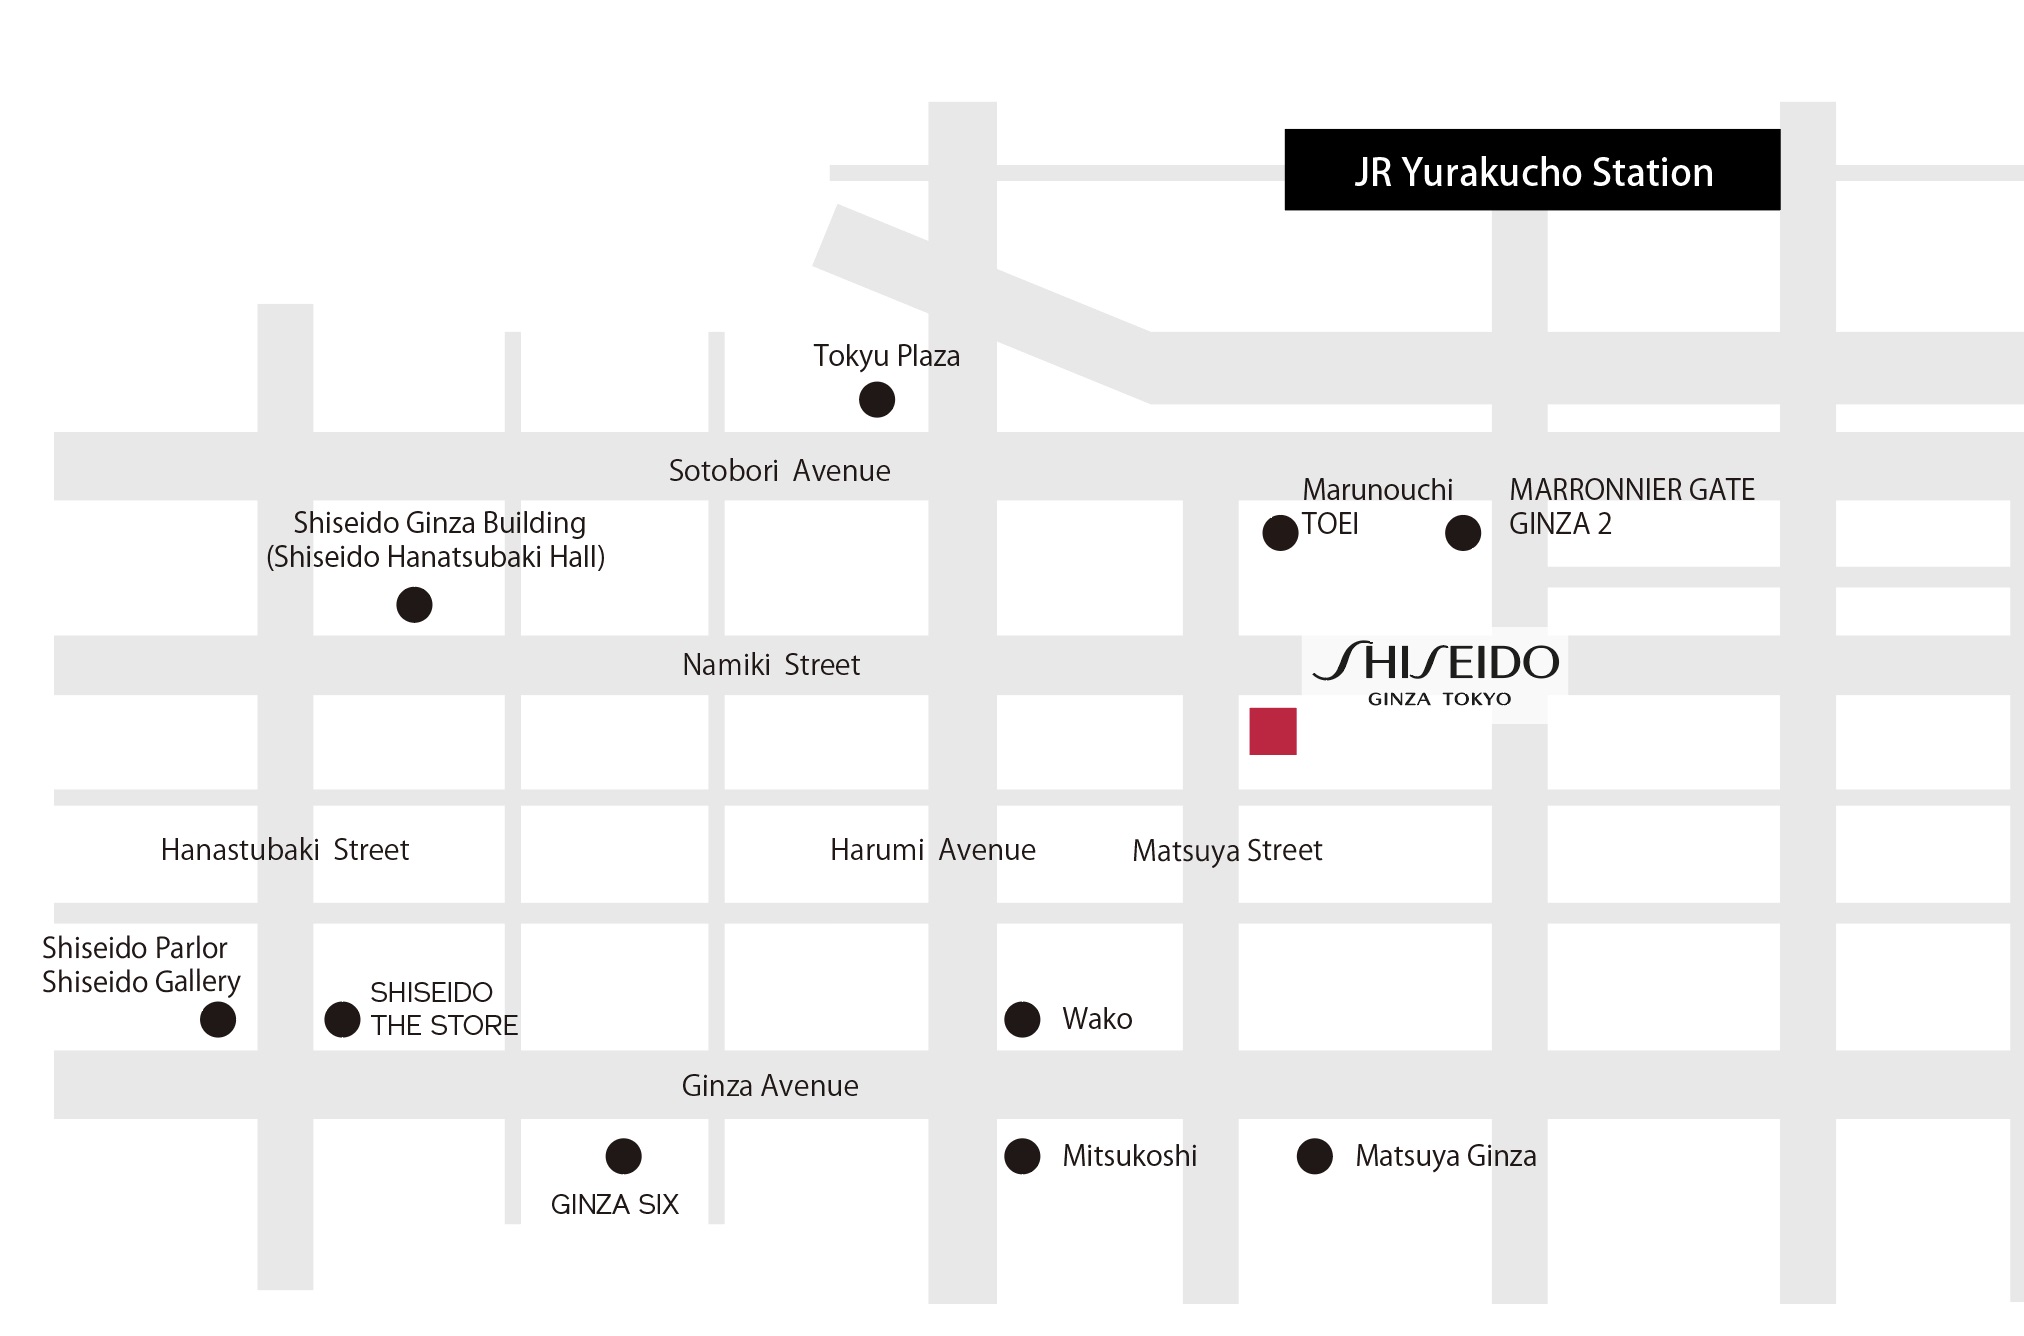 Shiseido's global prestige brand SHISEIDO first flagship store to